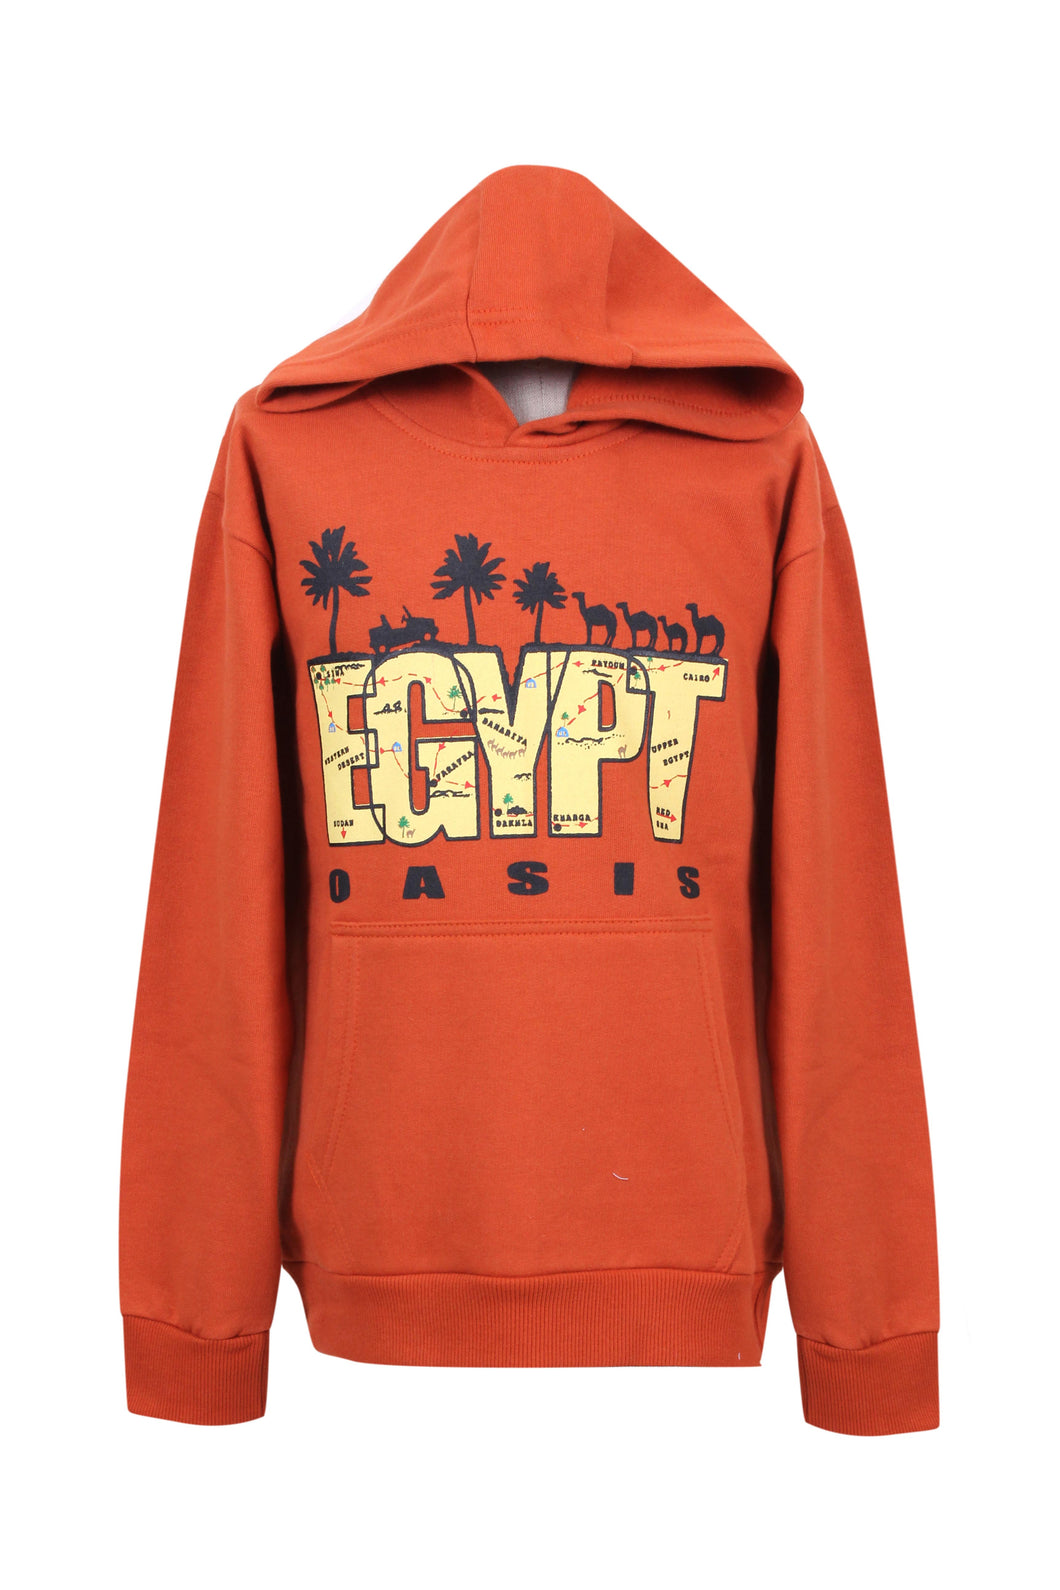 Egypt Kids Print Hoodie.